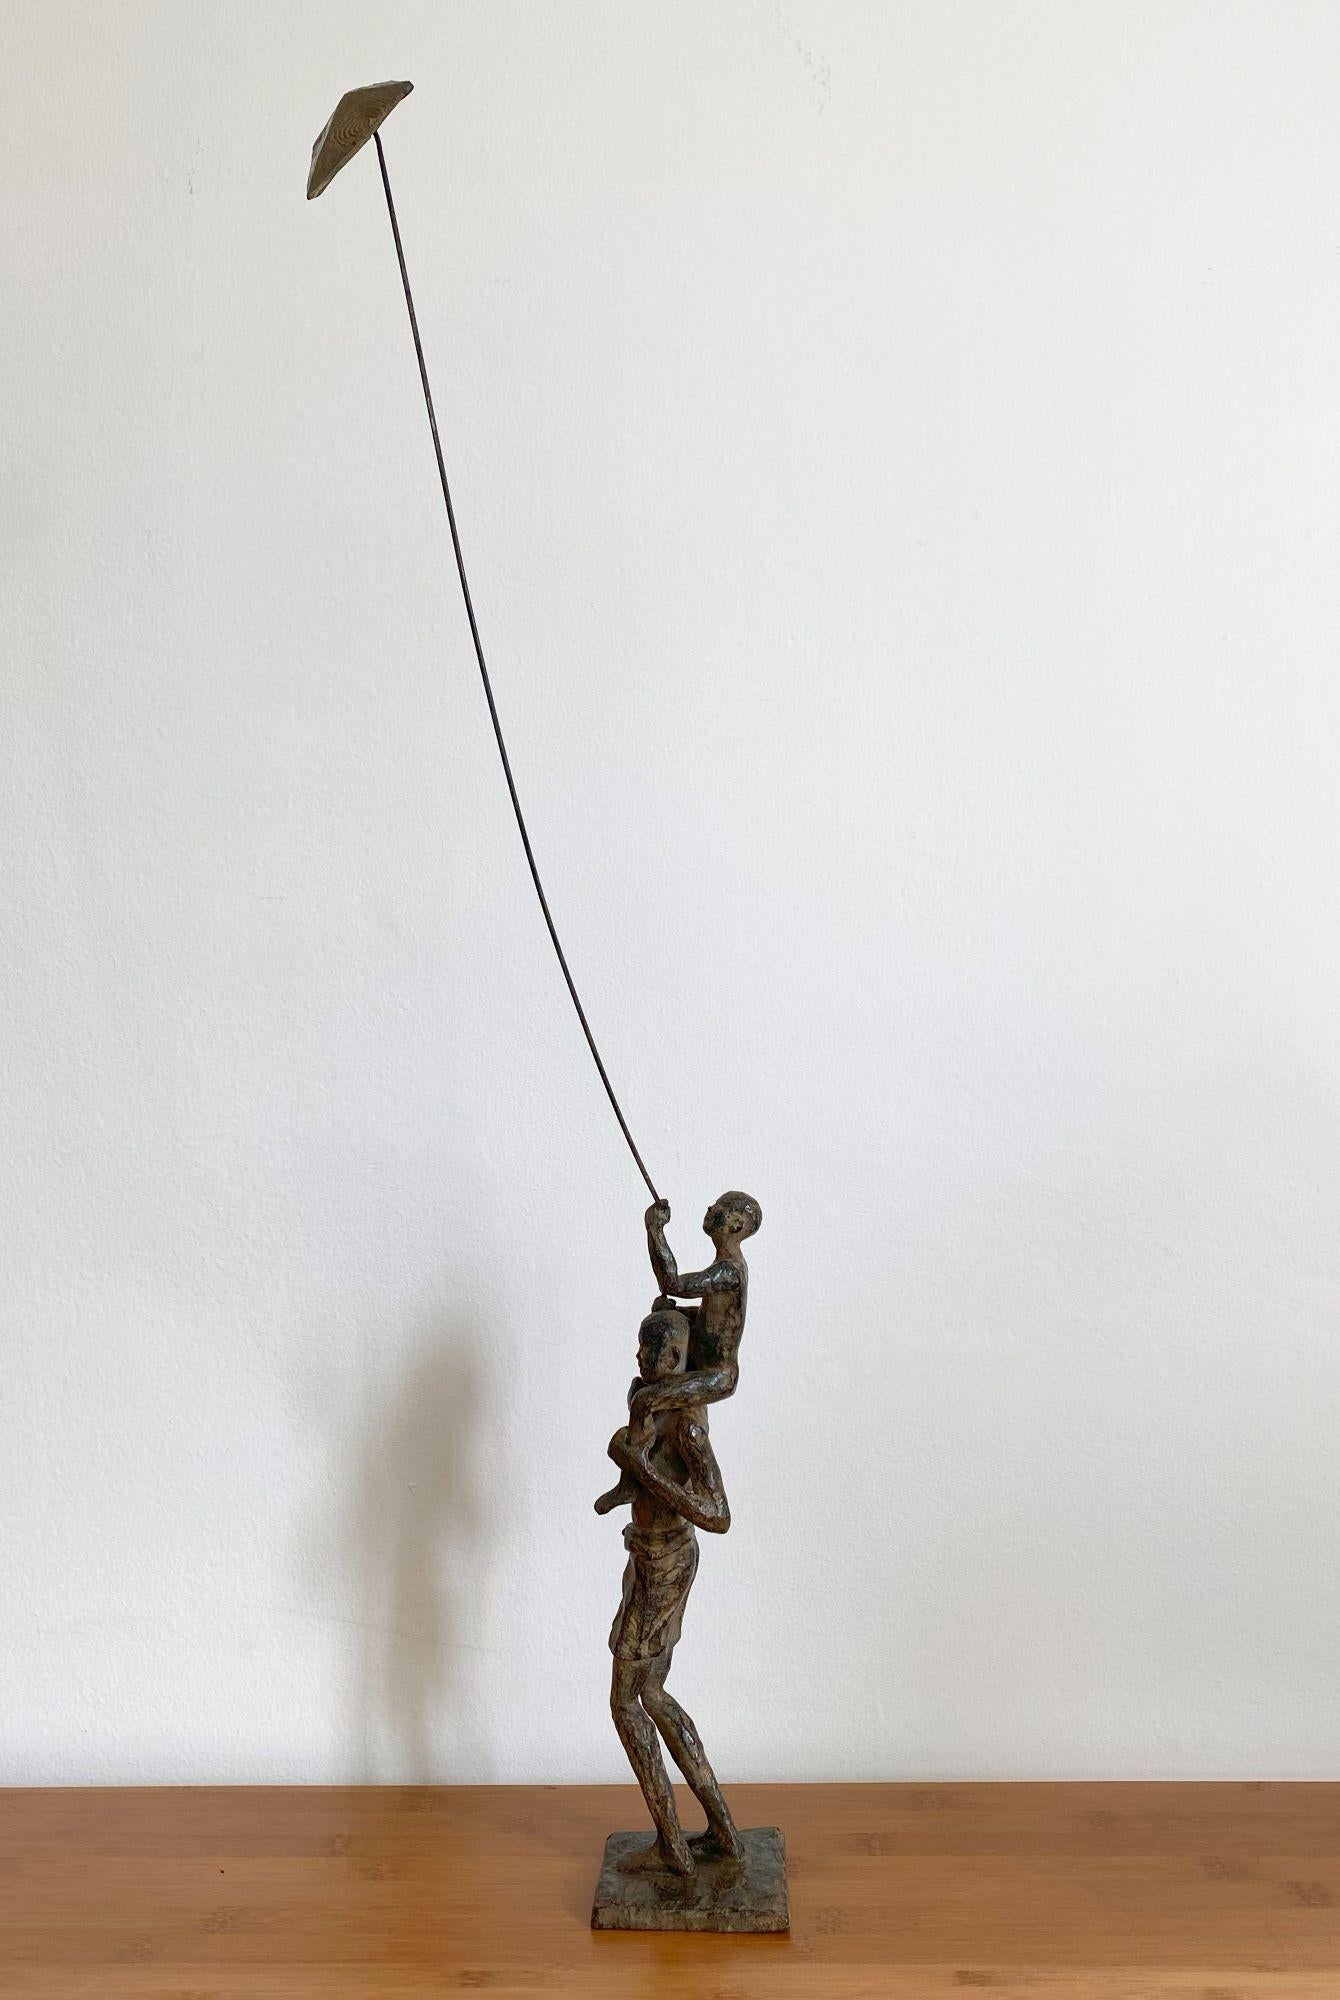 Childhood’s Sail VI by Marine de Soos - Bronze sculpture, child's figure, kite For Sale 3